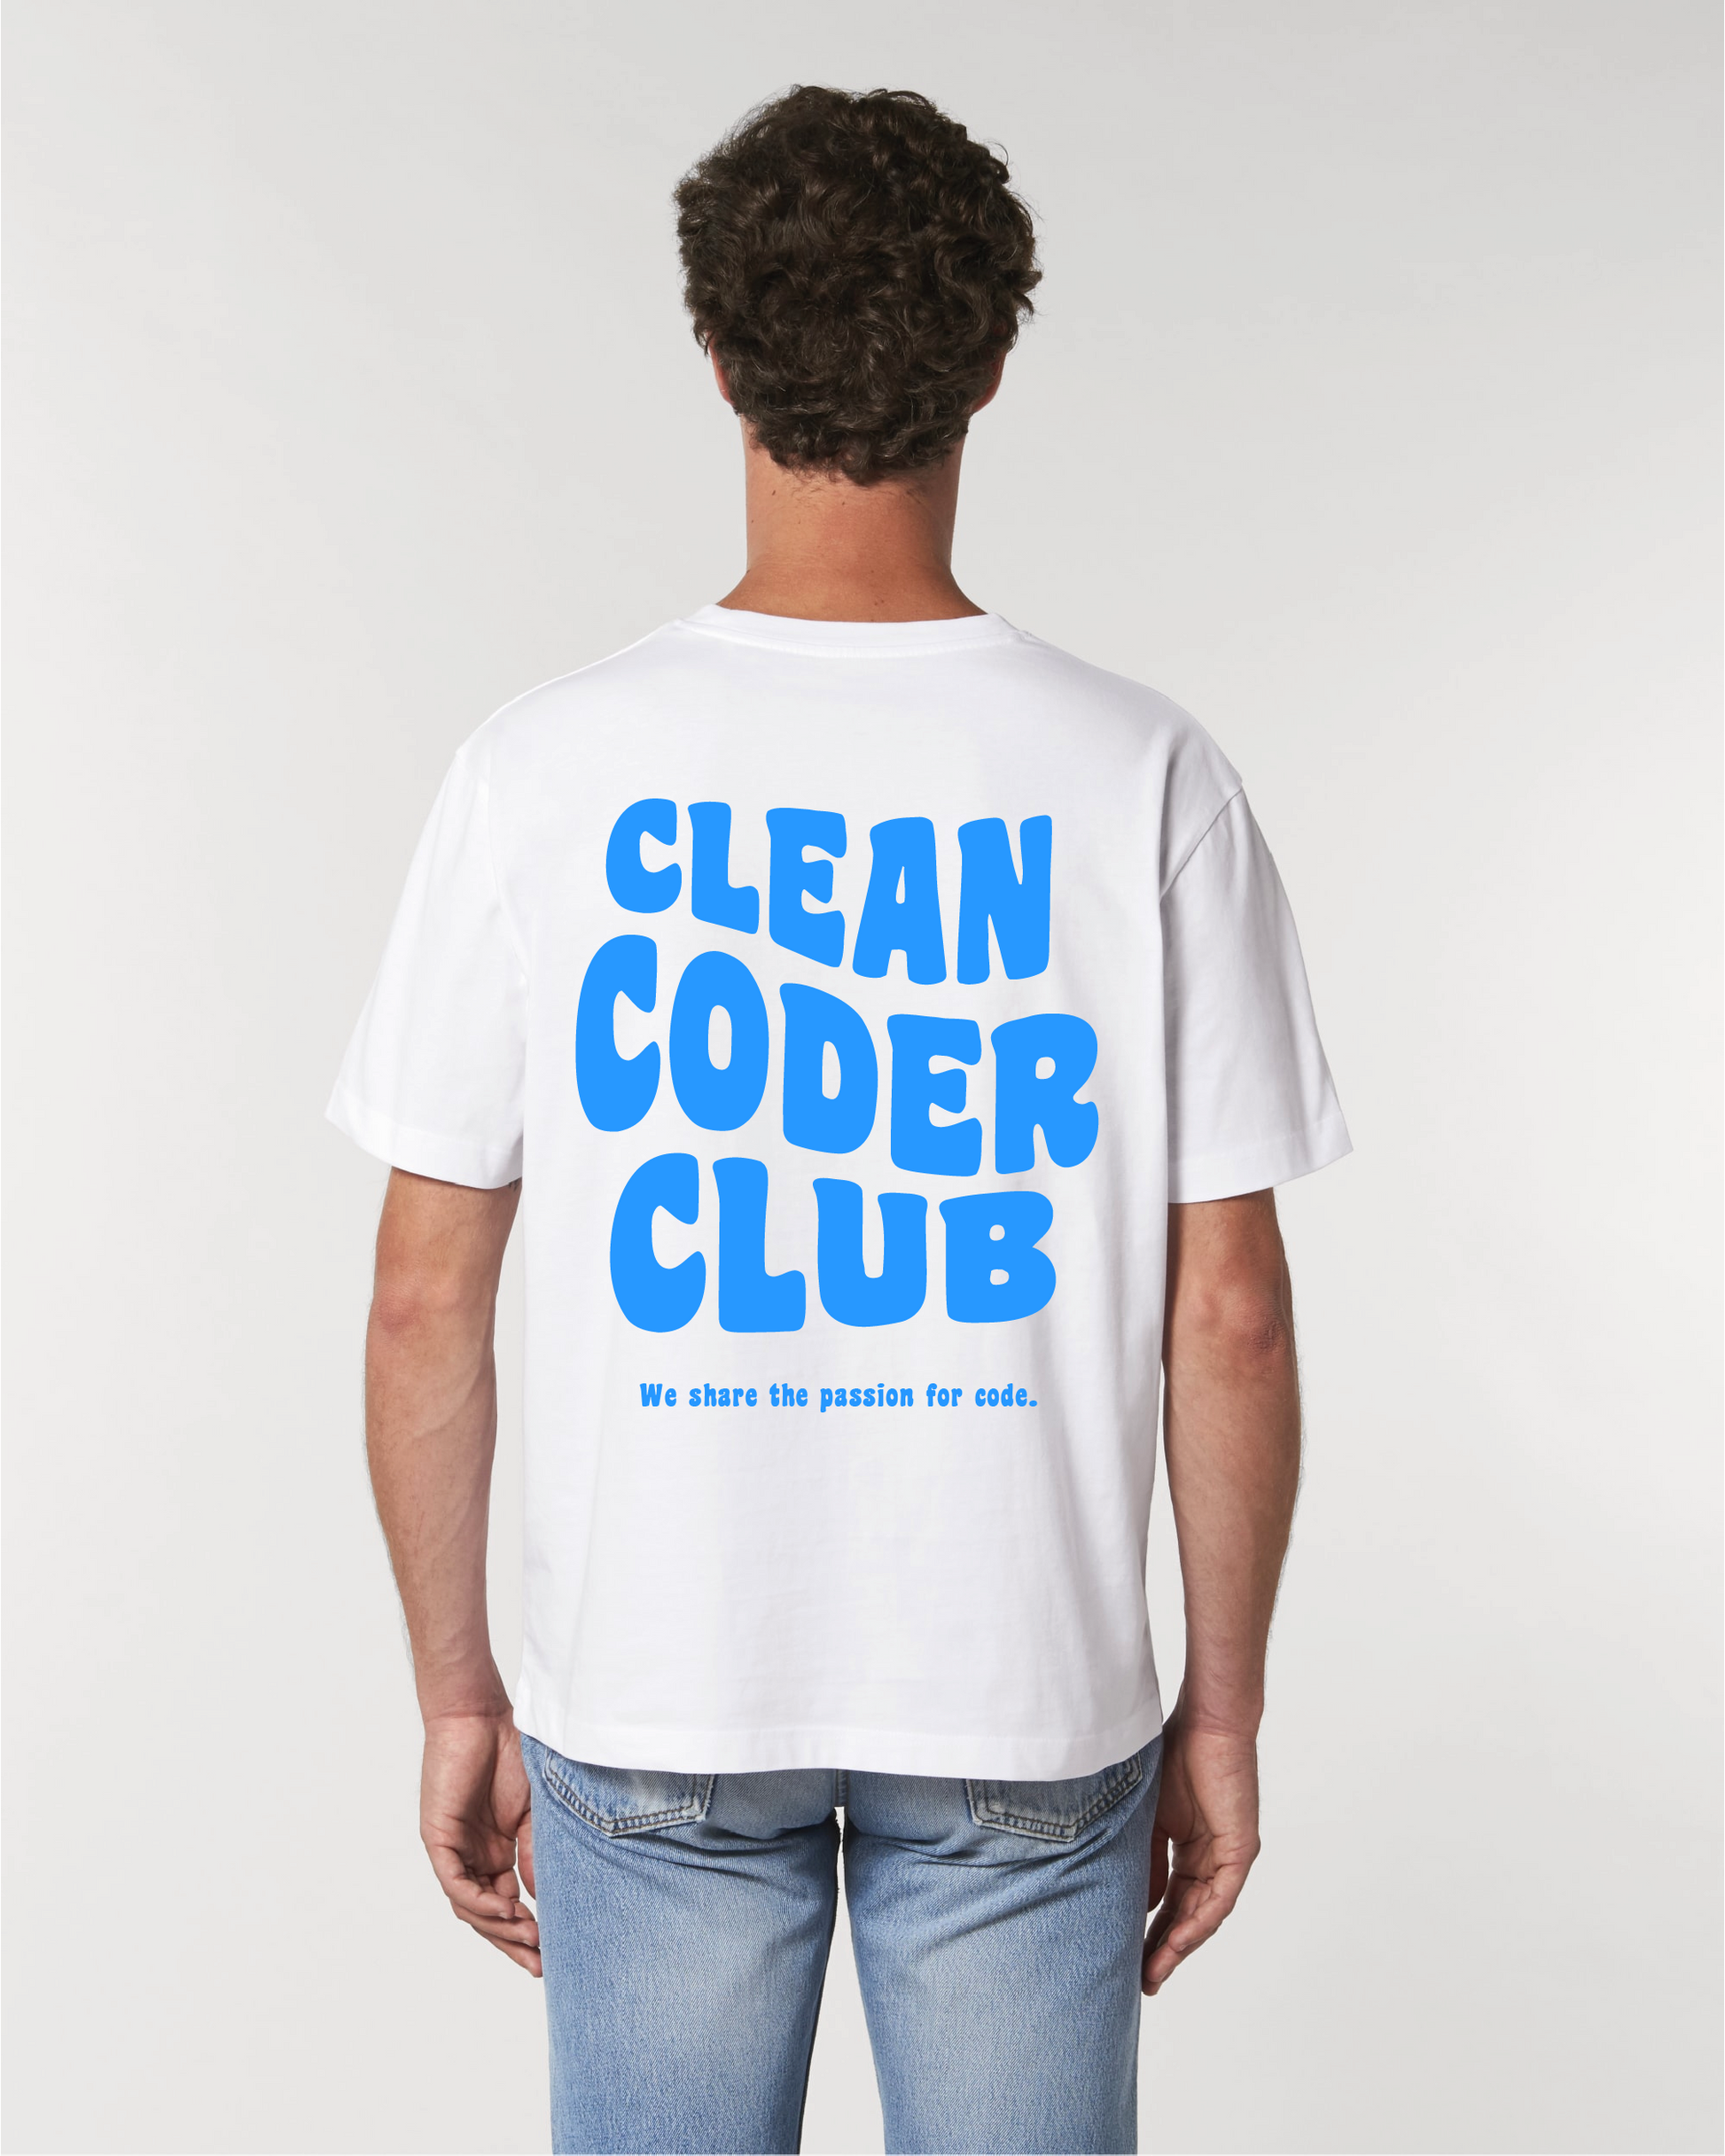 Men wearing the Coder / Programmer t-shirt "Clean Coder Club" in white